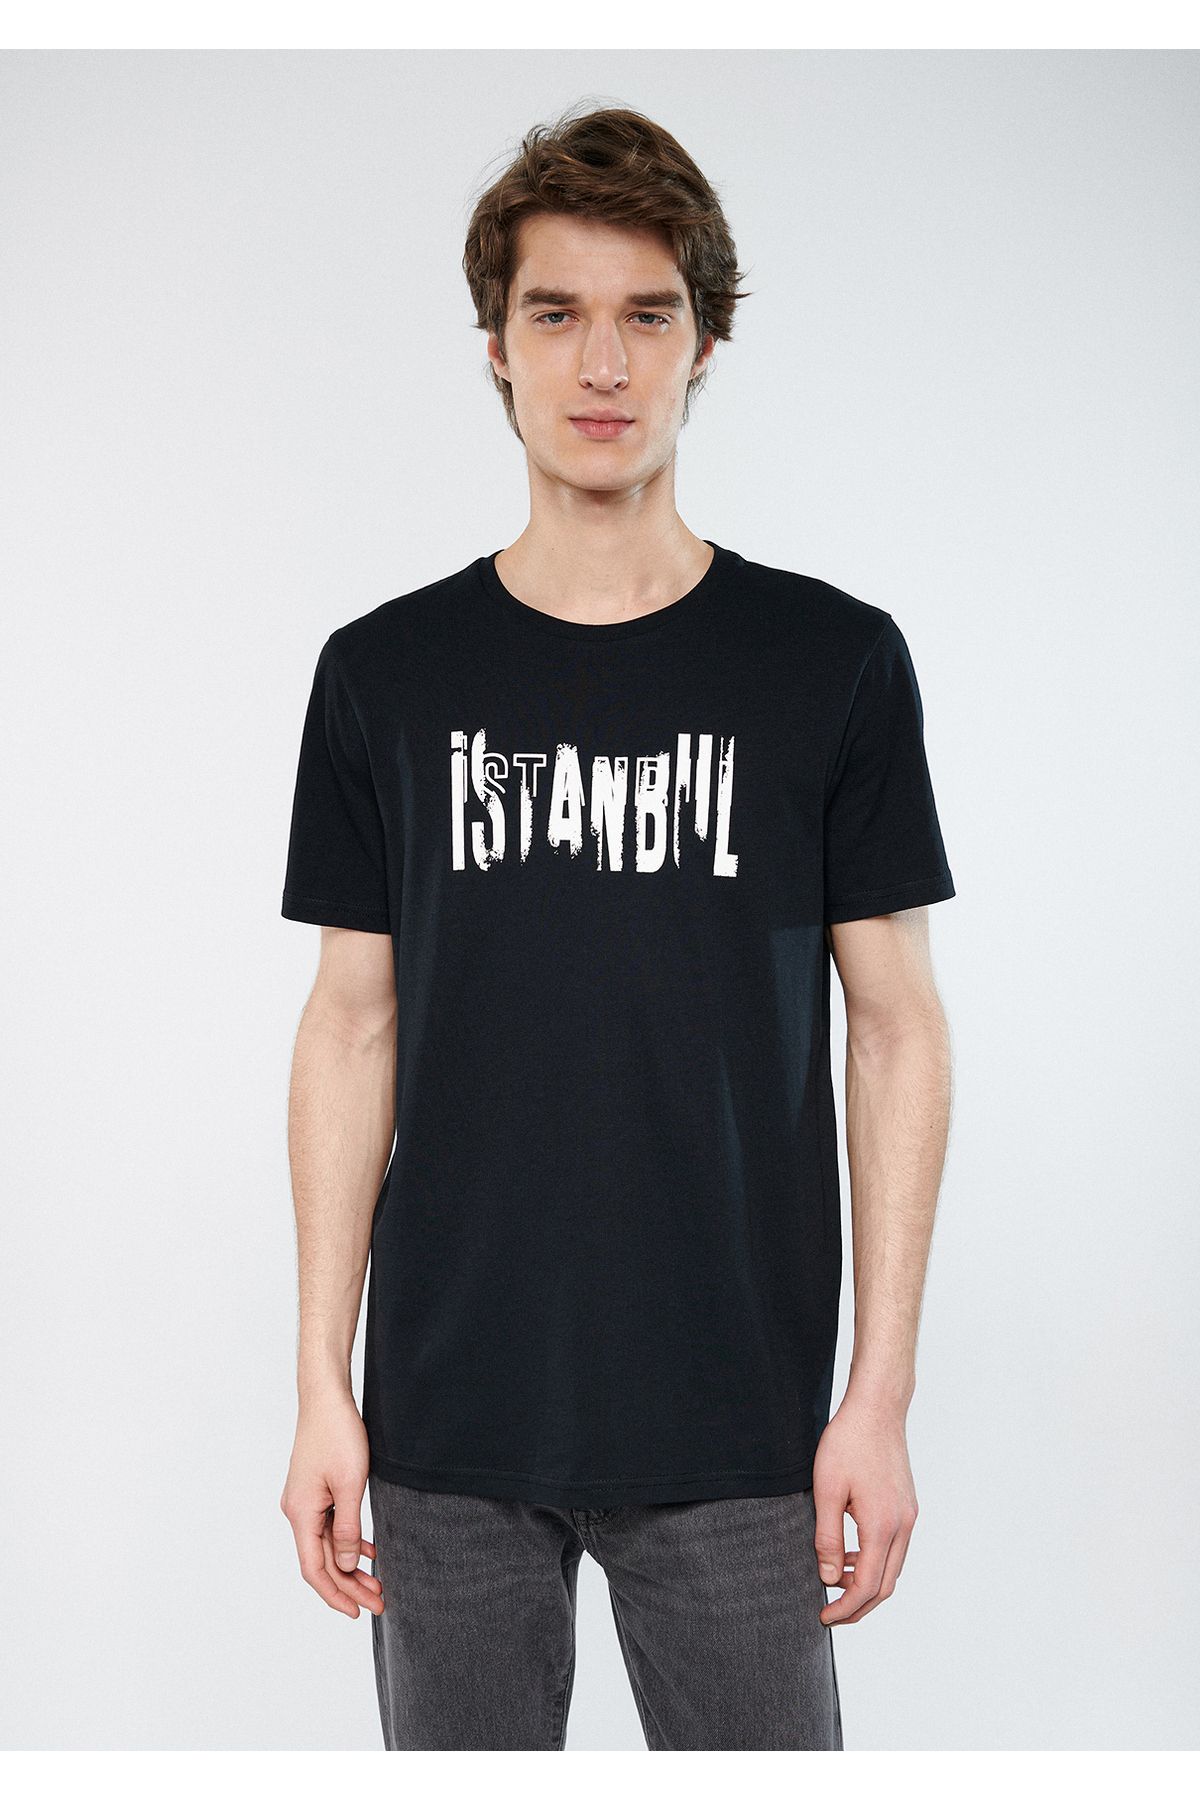 Mavi تی شرت سیاه چاپی استانبول مناسب / برش معمولی 067116-900